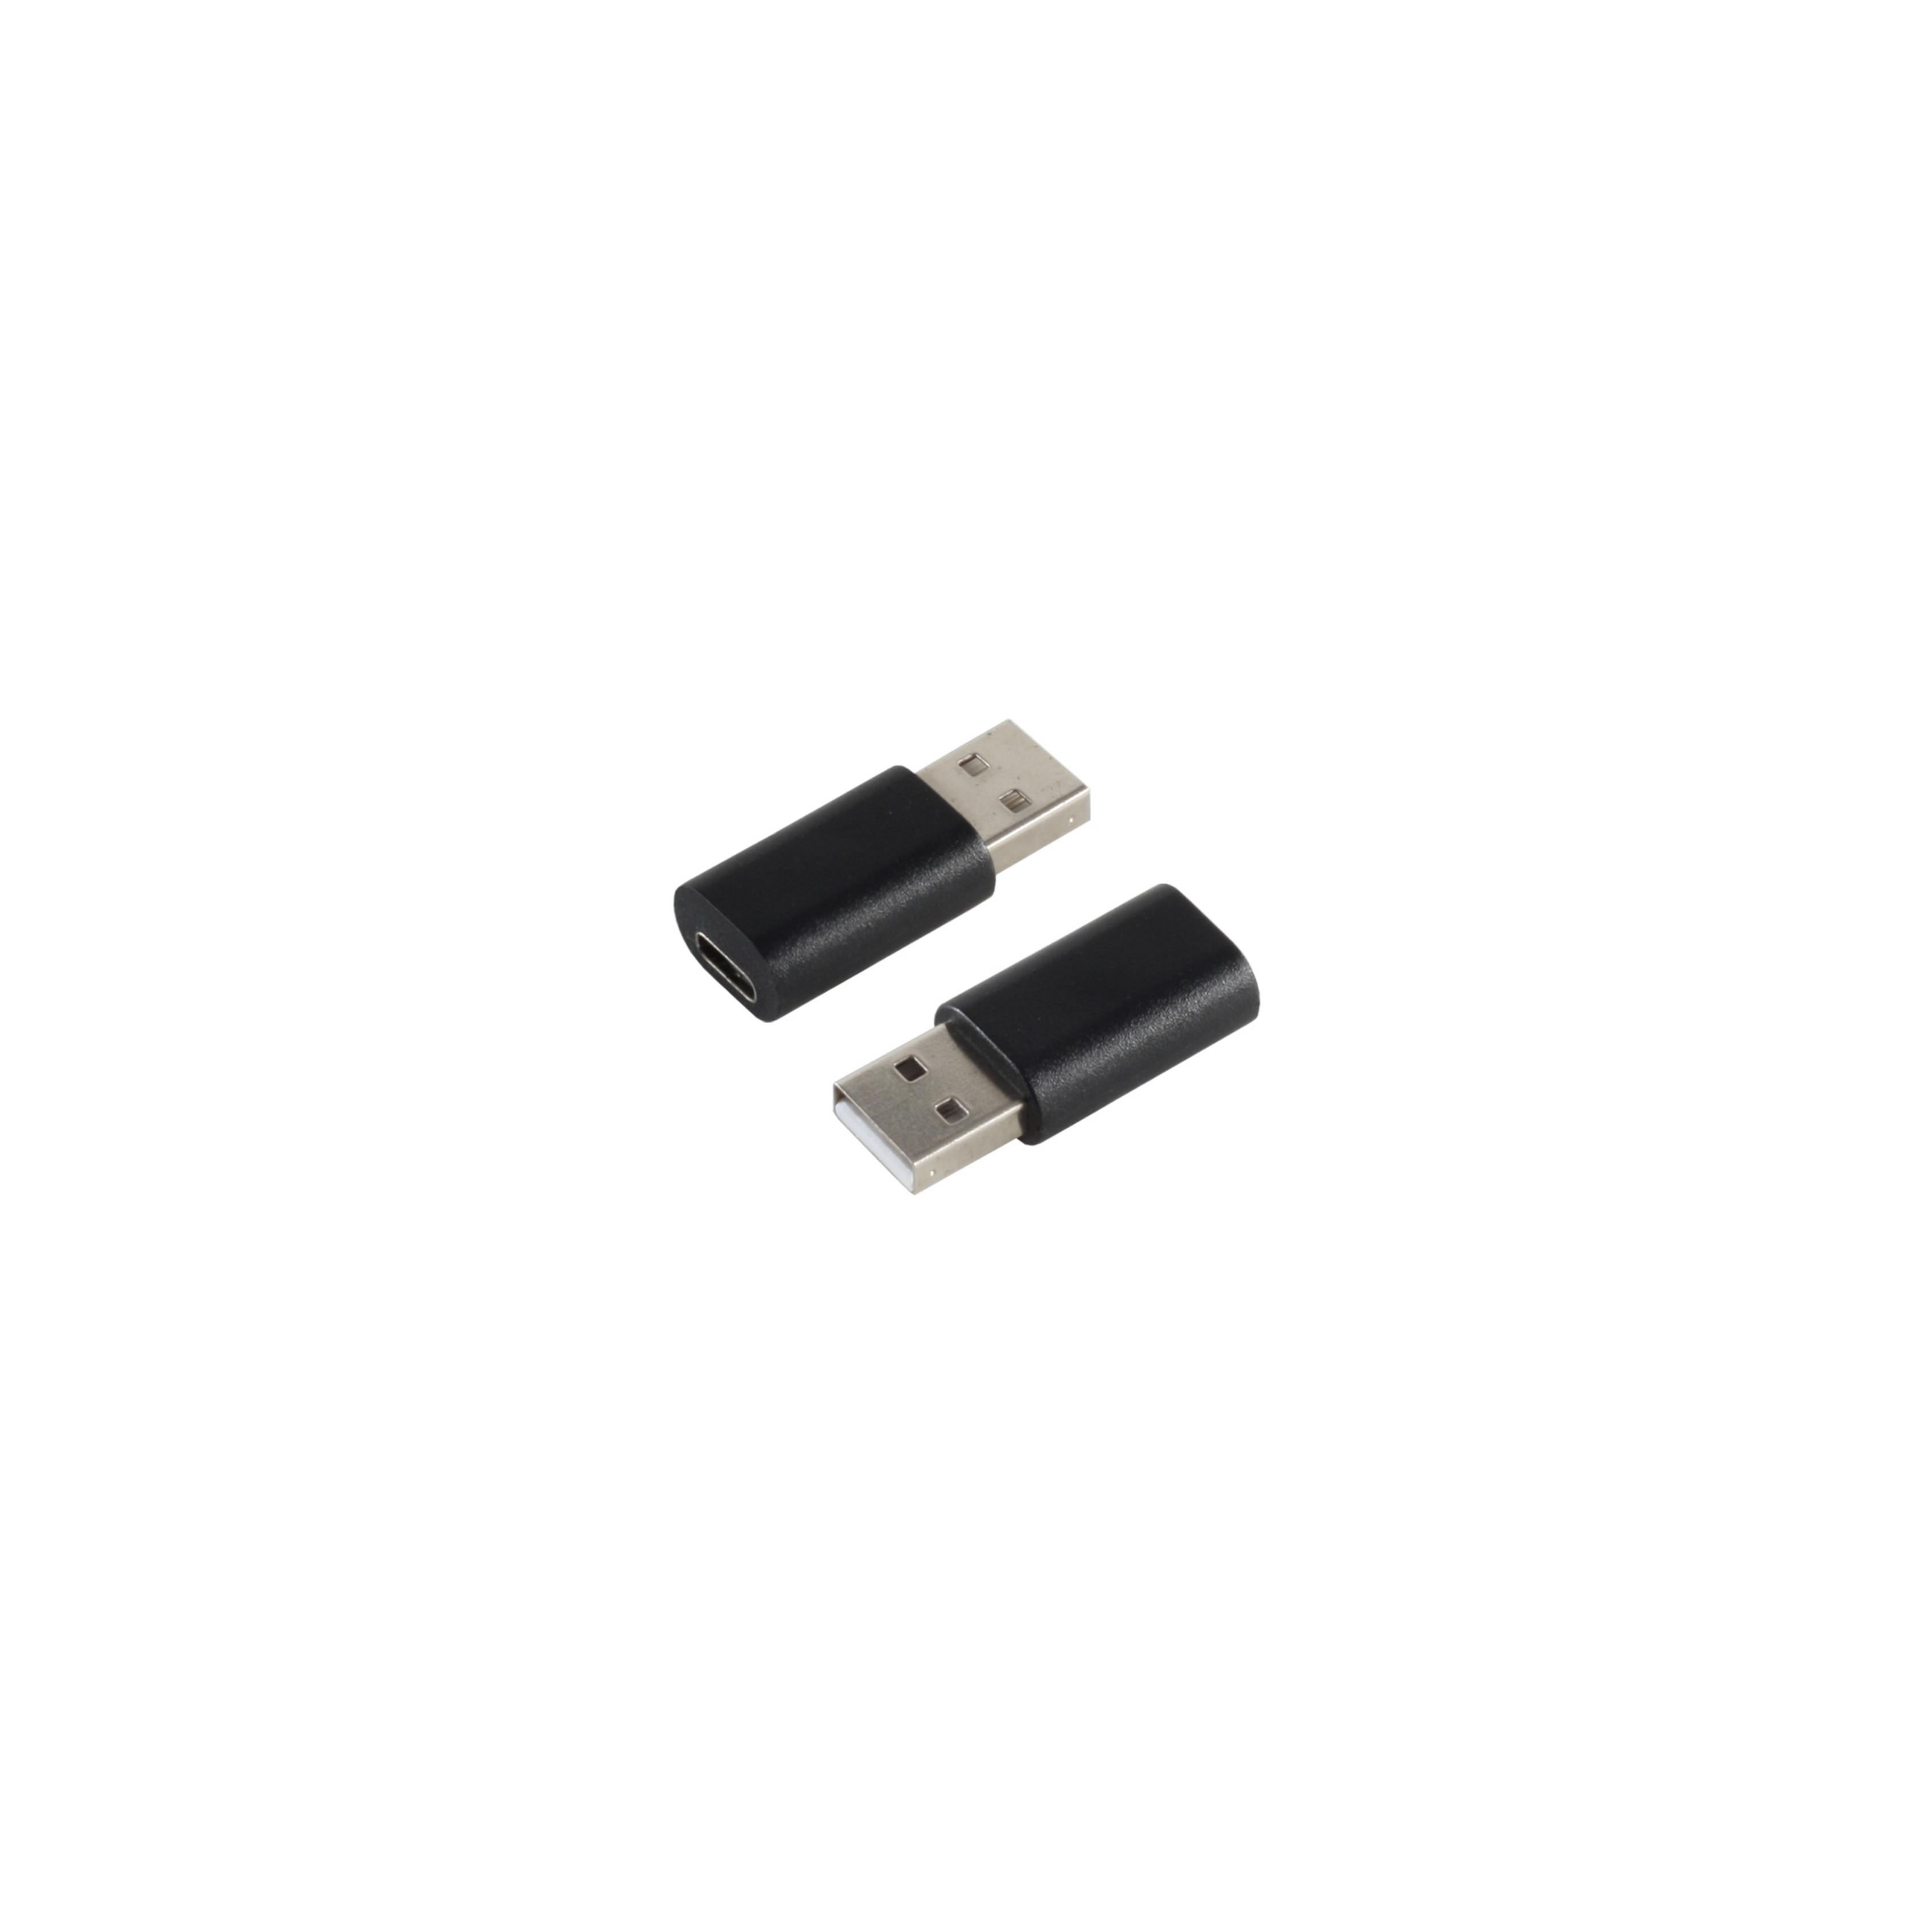 S/CONN MAXIMUM CONNECTIVITY Stecker C USB USB-C USB 3.1 A Adapter auf Adapter 2.0 Buchse